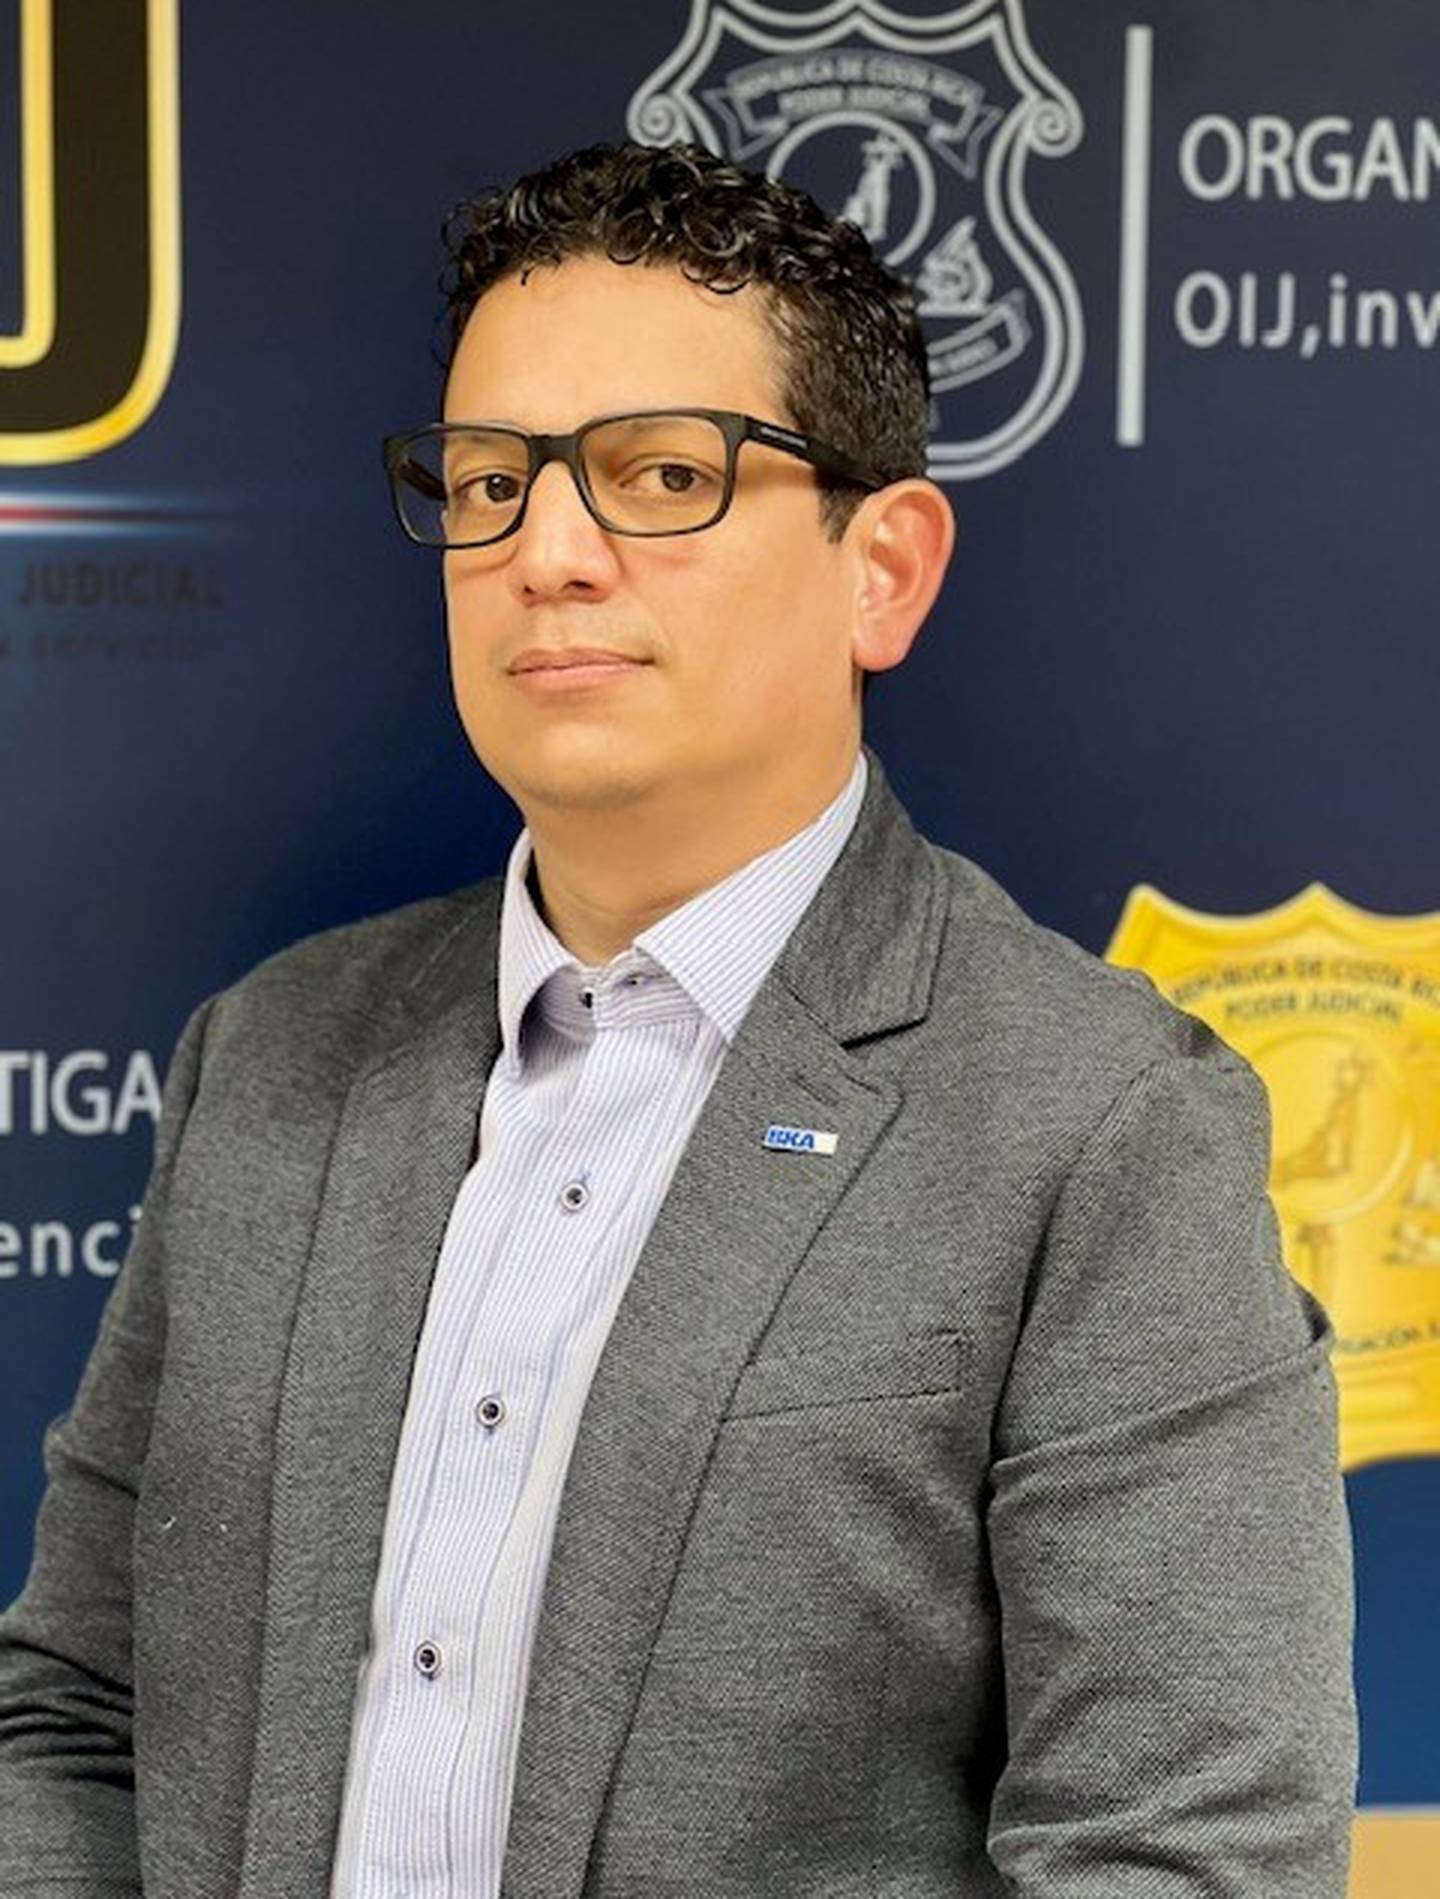 Fernando Jiménez, agente del OIJ